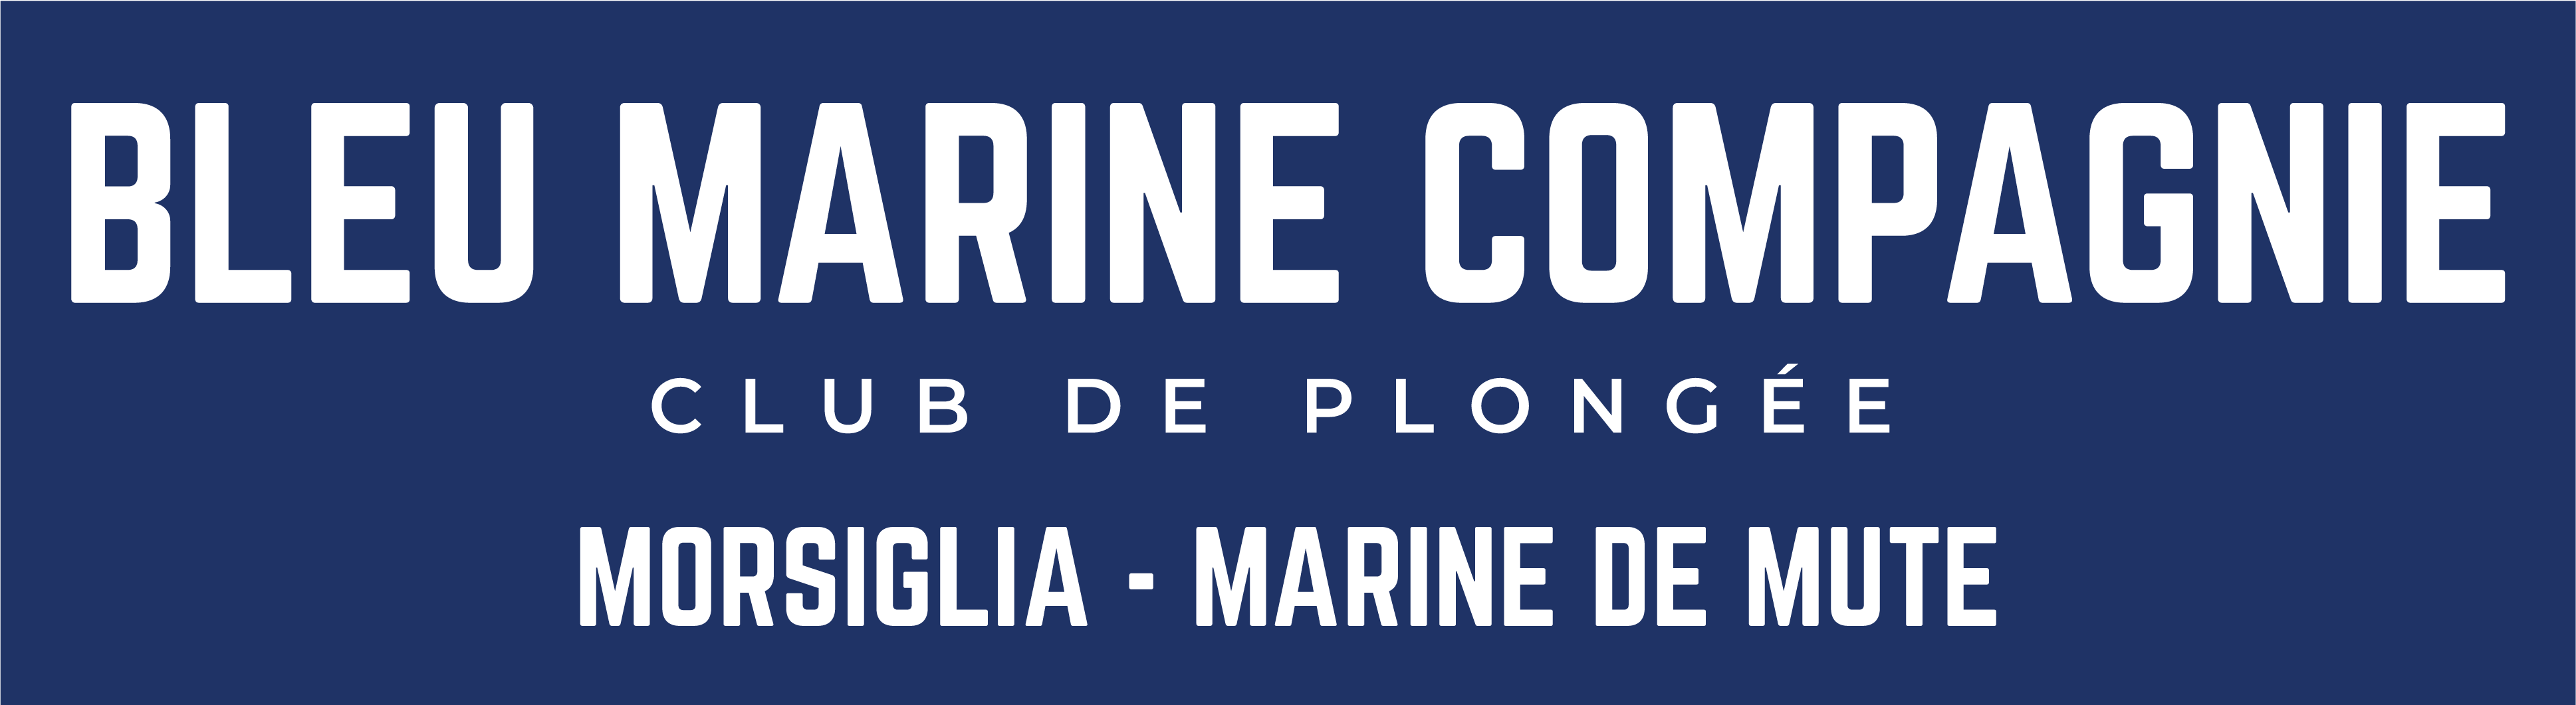 Bleu Marine Compagnie